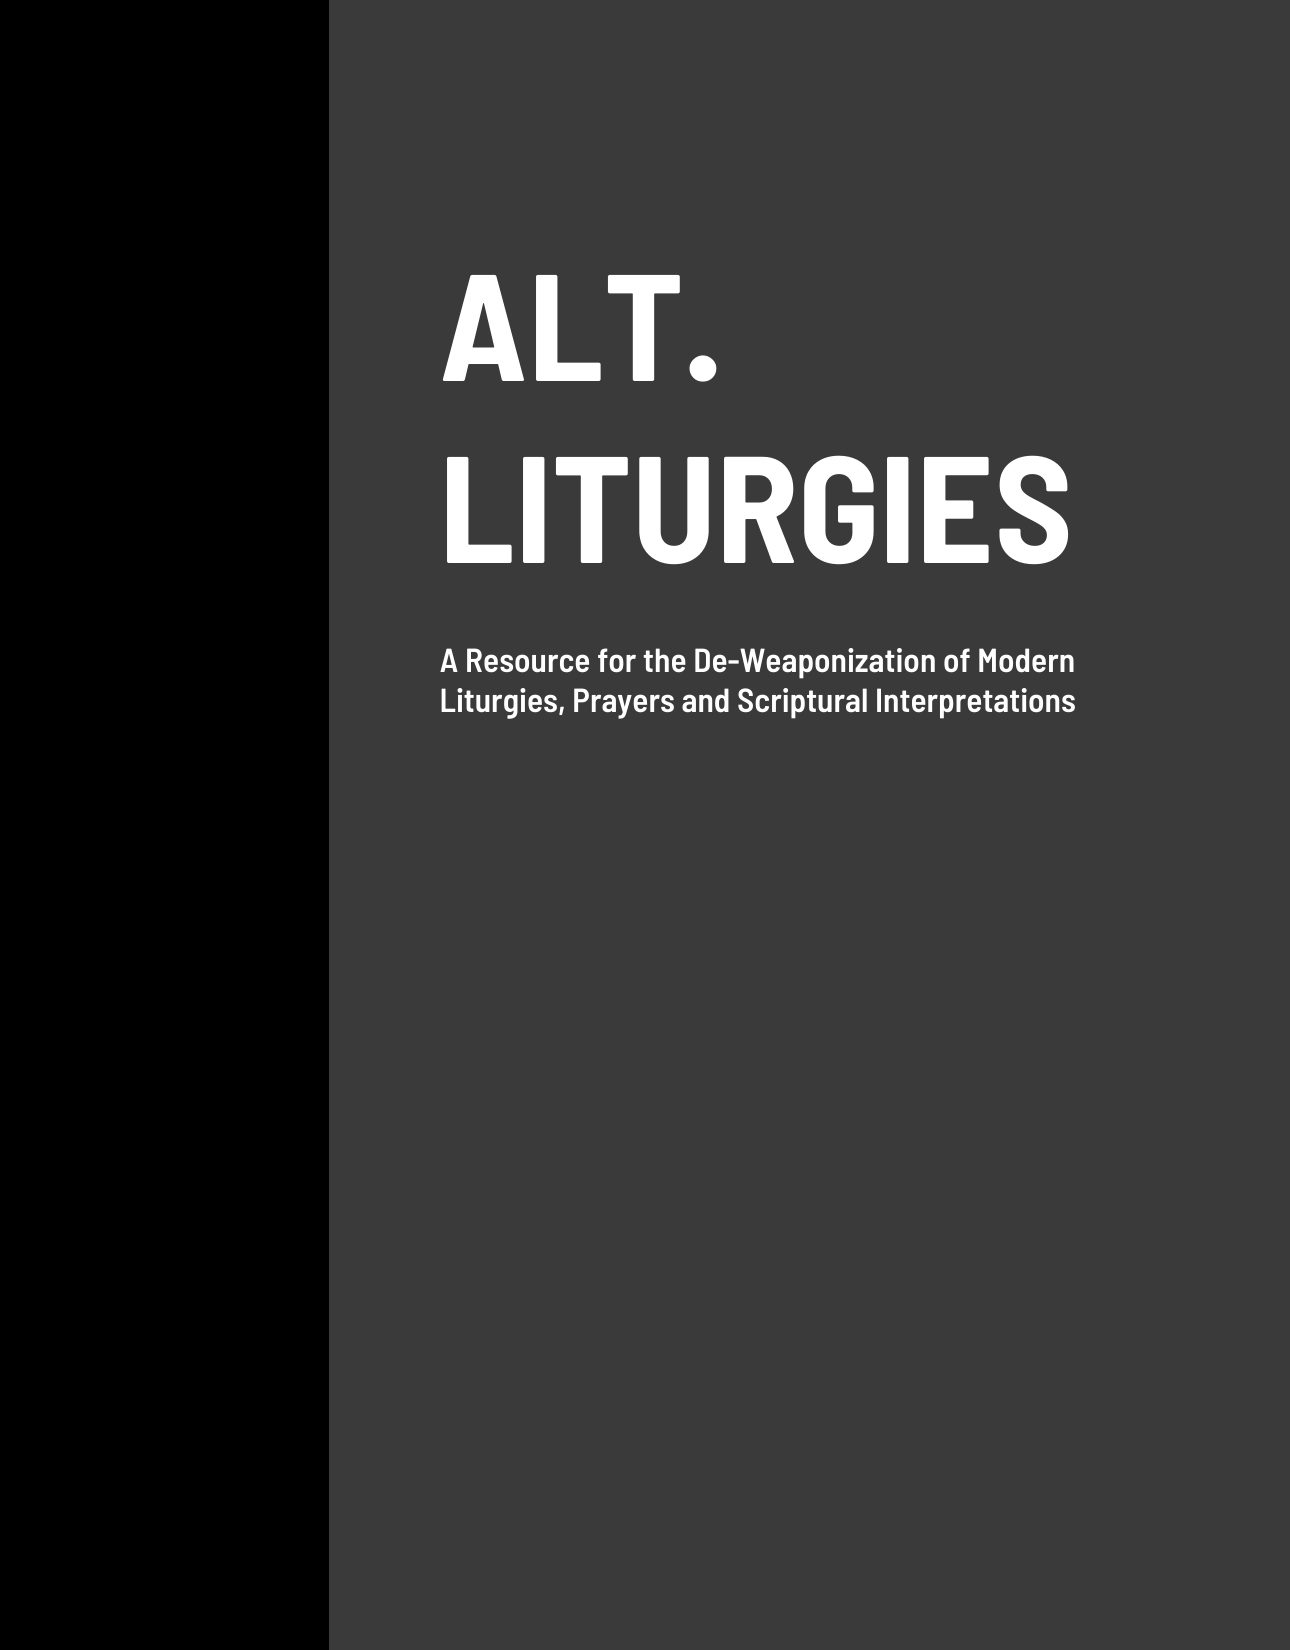 ALT. LITURGIES